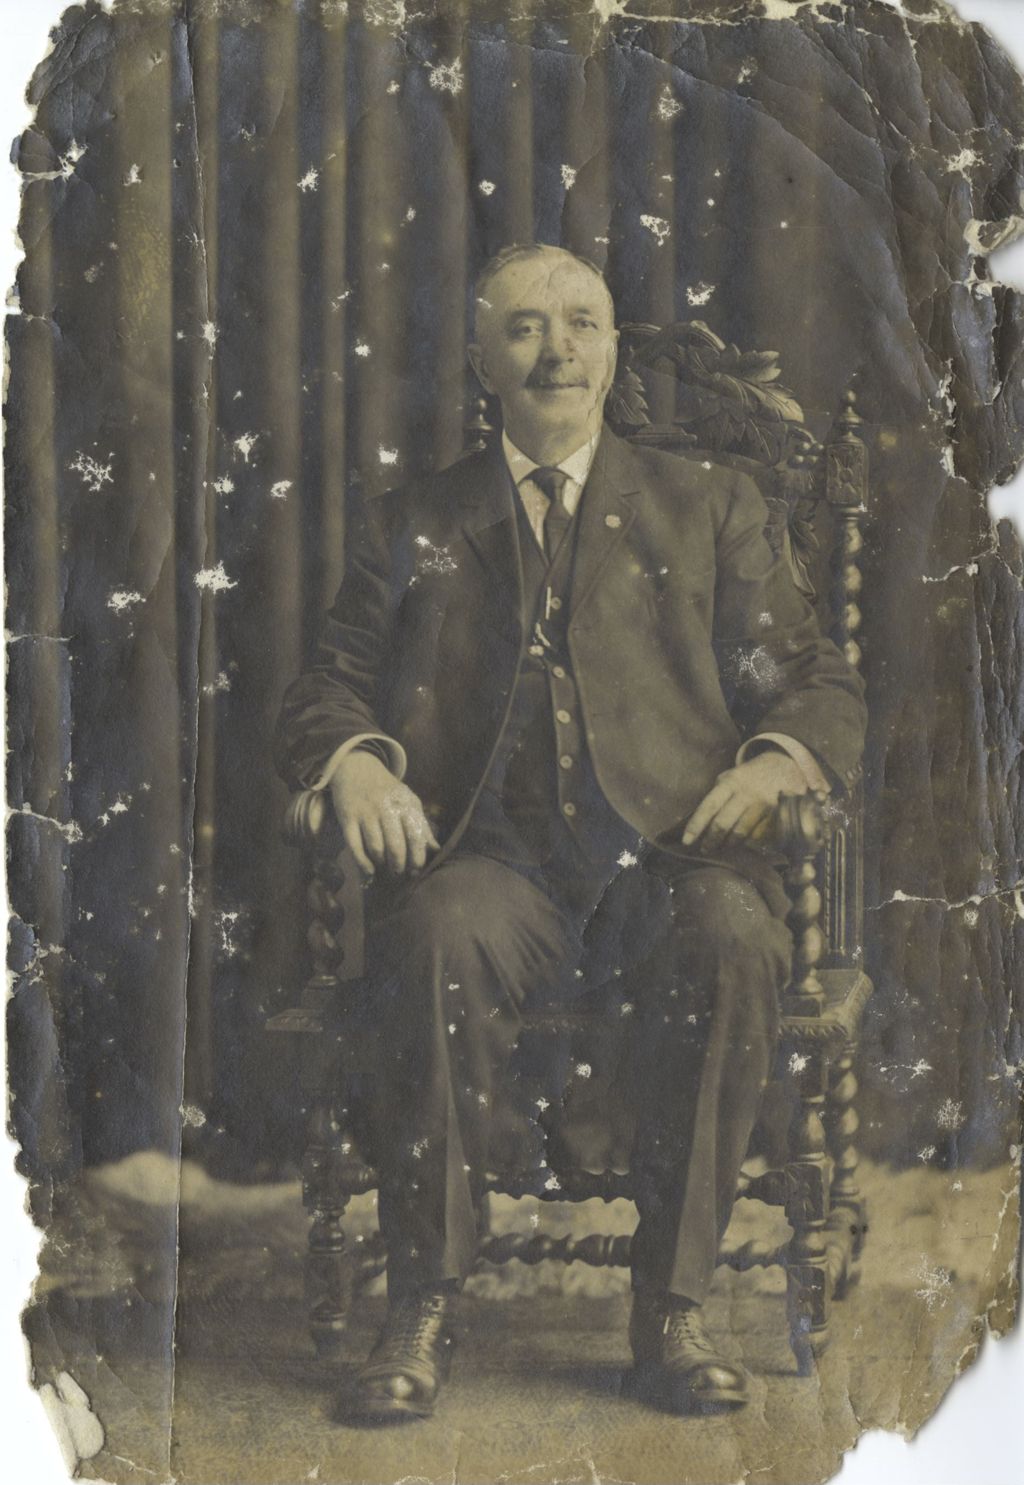 Miniature of Male relative of Richard J. Daley